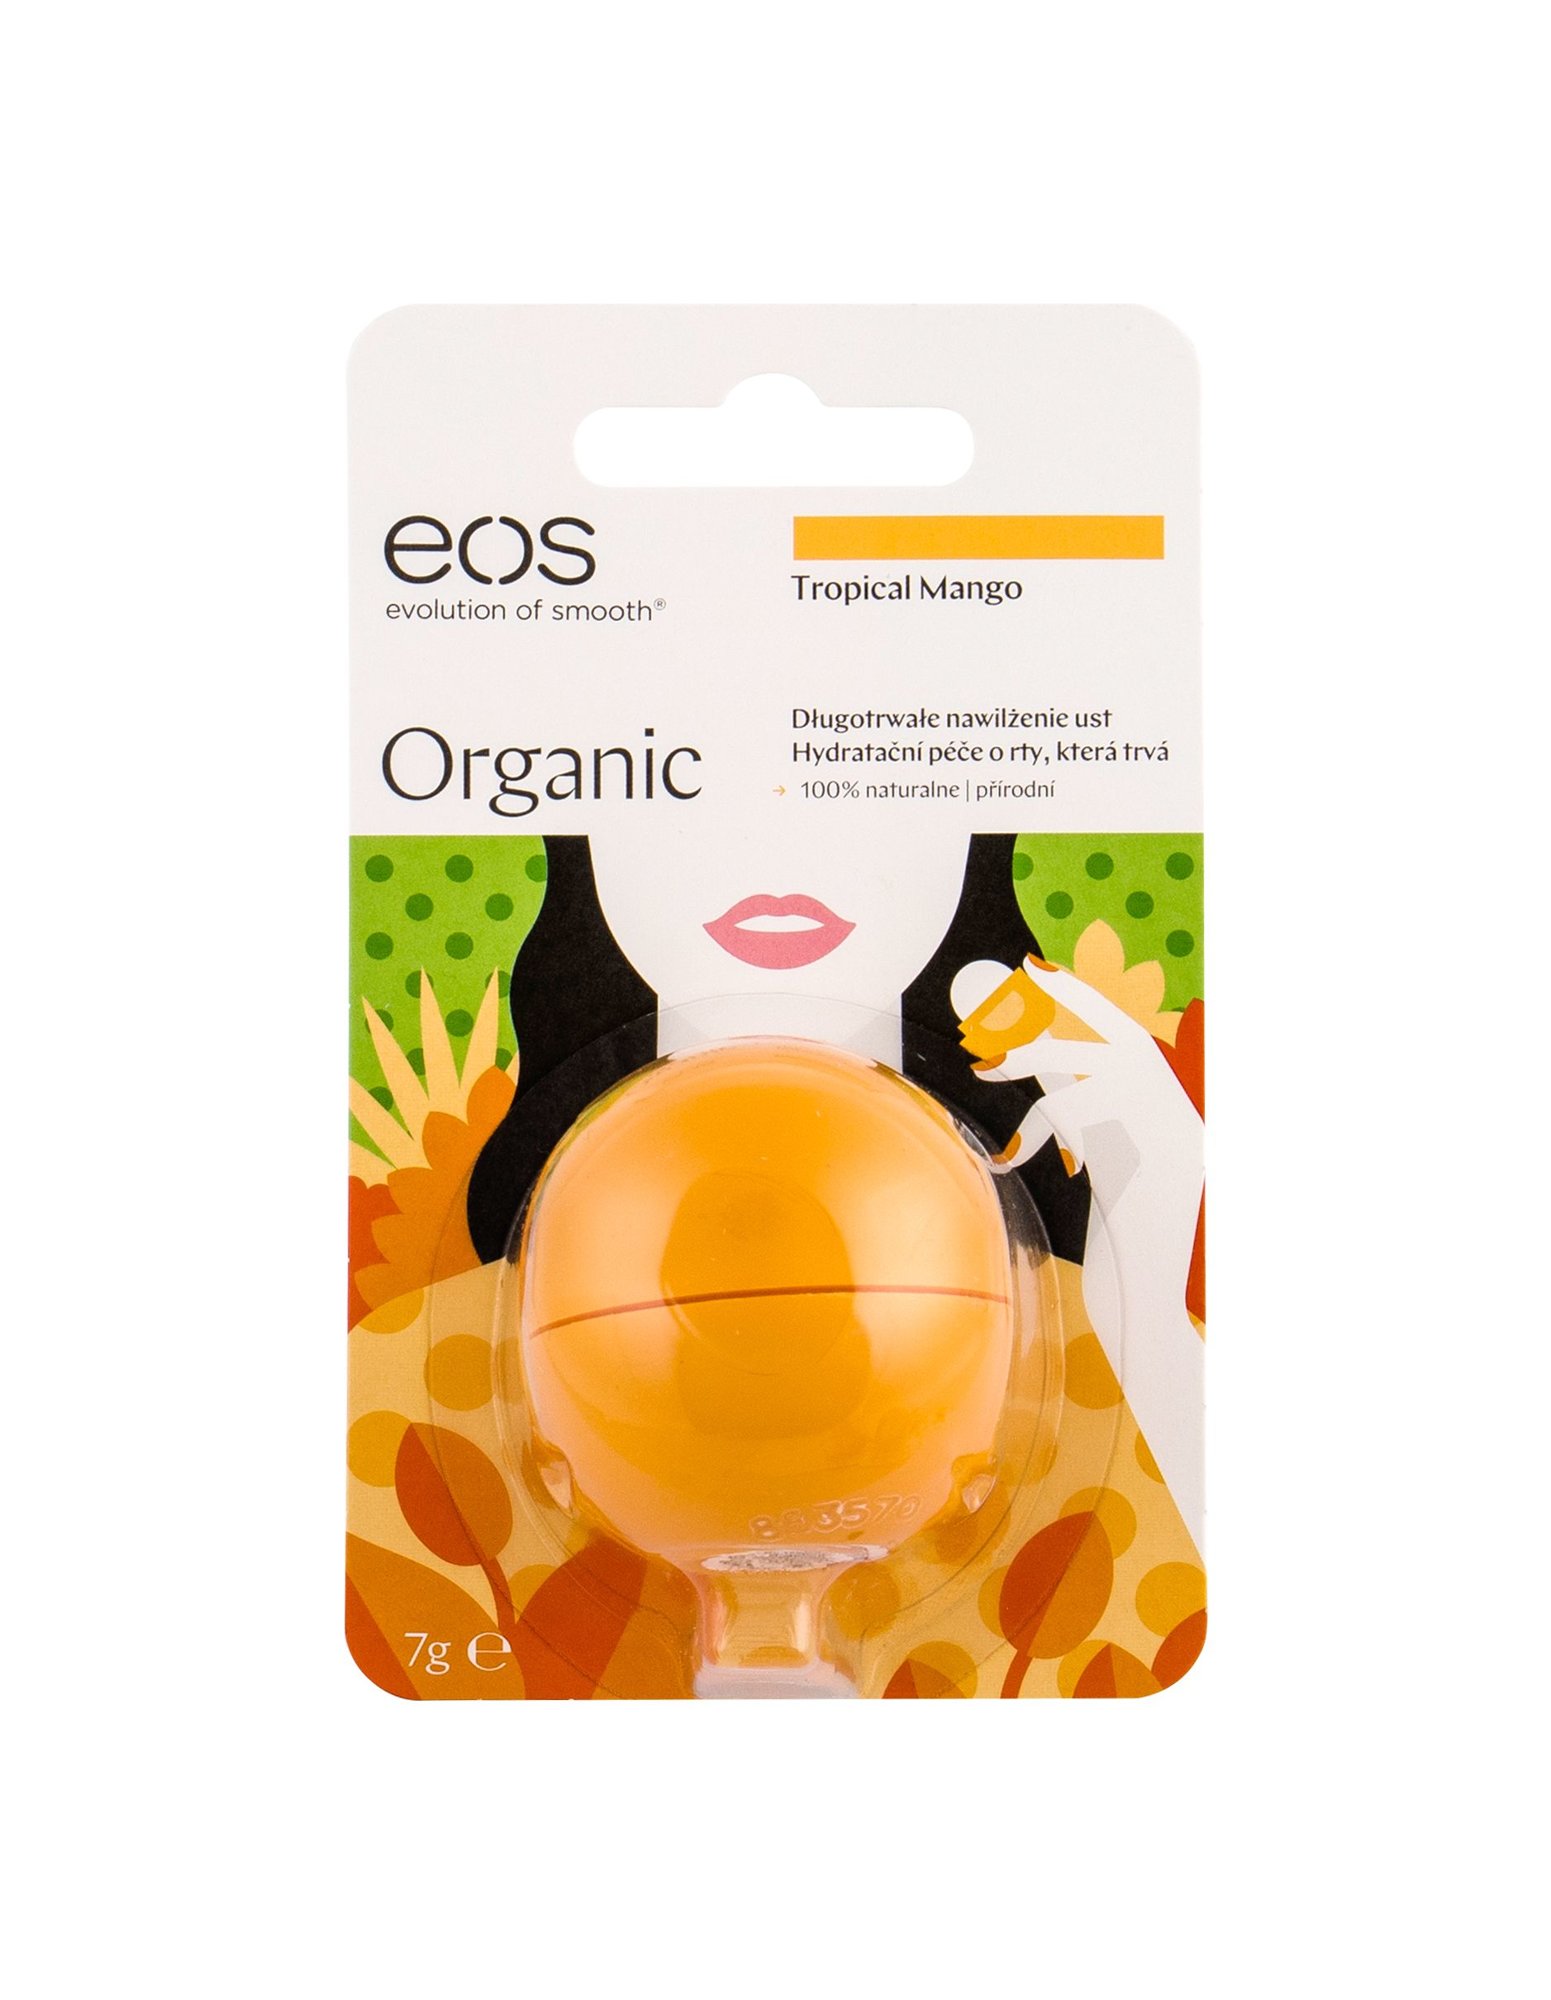 EOS Organic lūpų balzamas